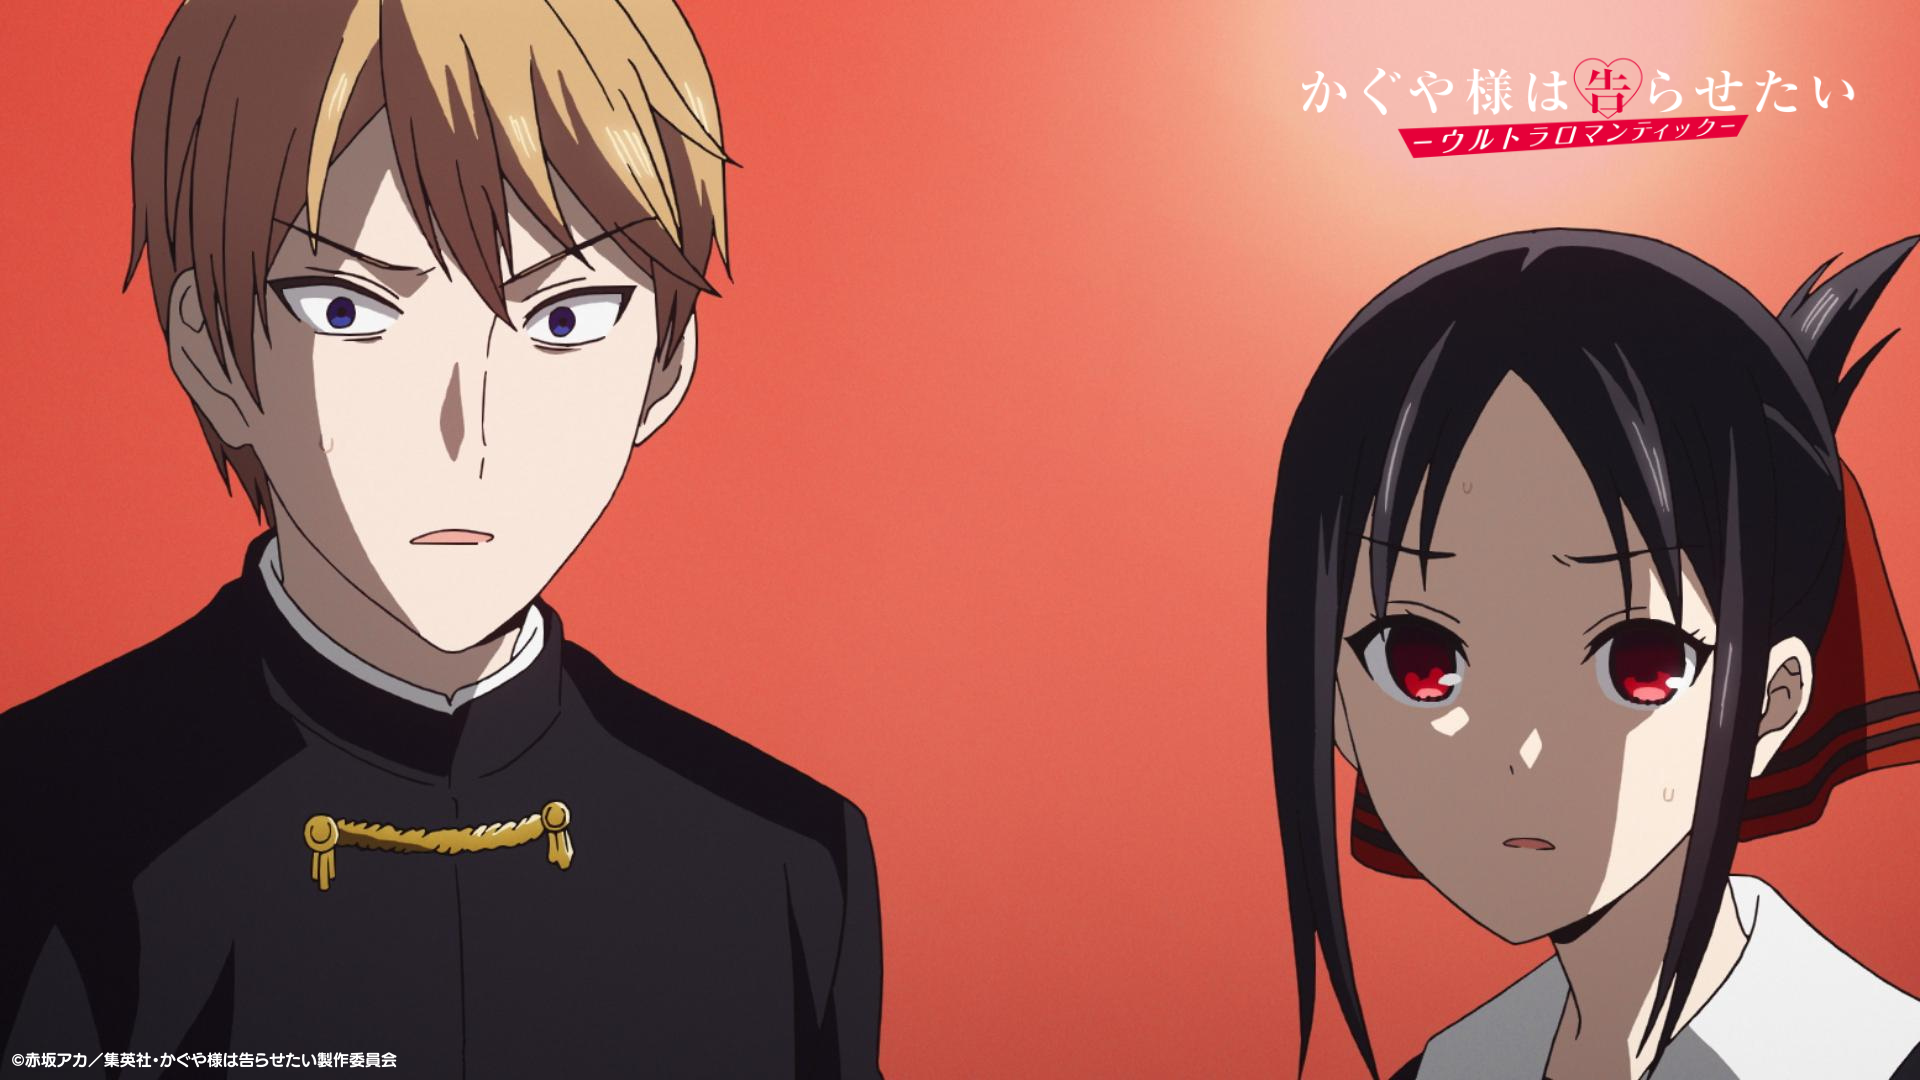 La tercera temporada del anime Kaguya-Sama: Love is War -Ultra